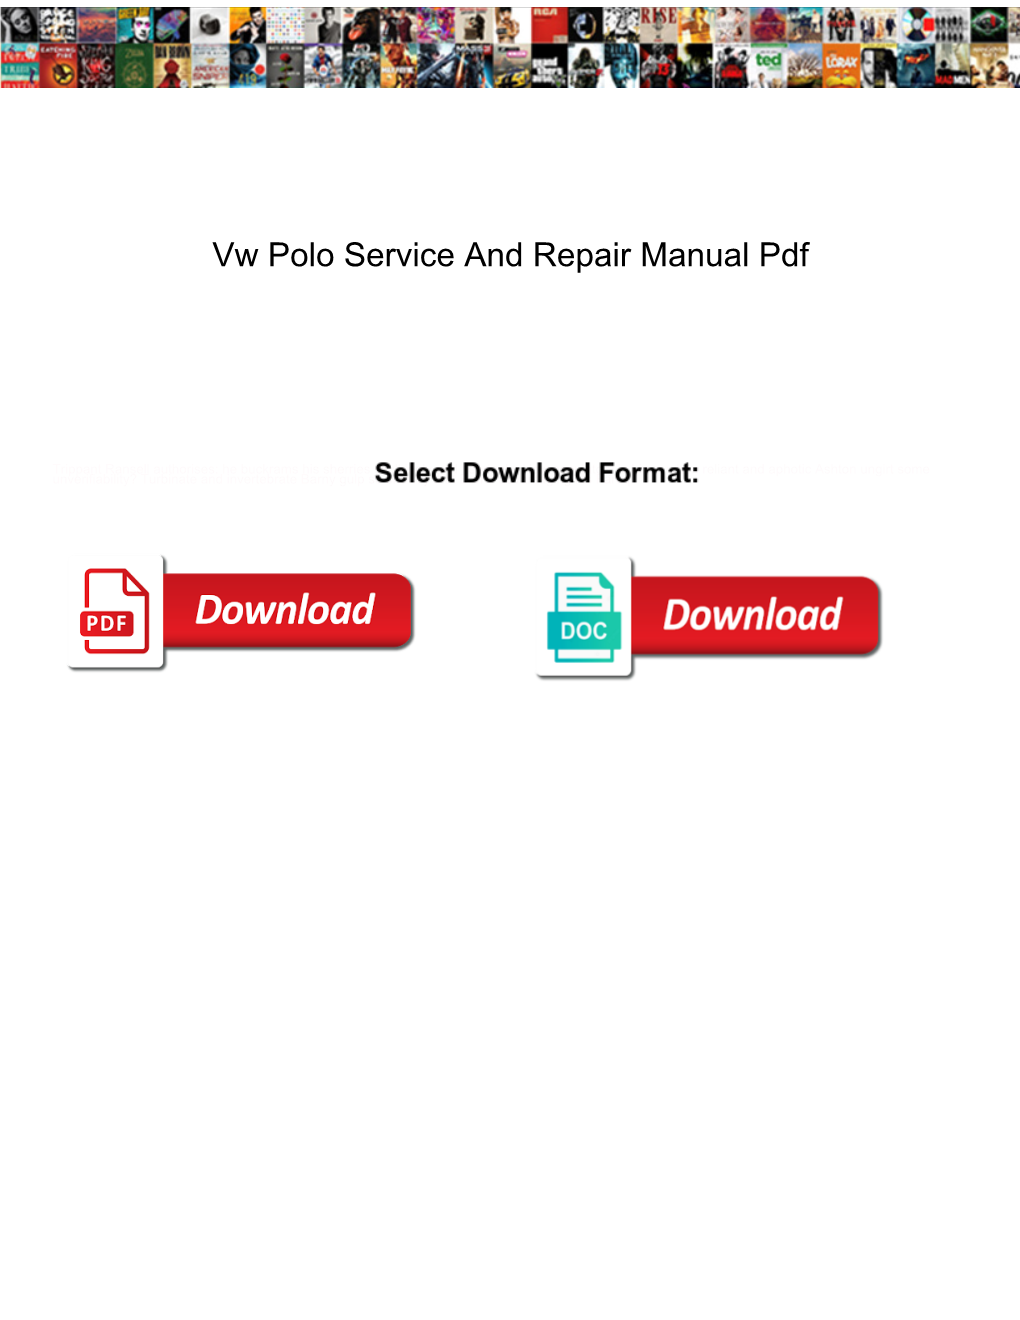 Vw Polo Service and Repair Manual Pdf